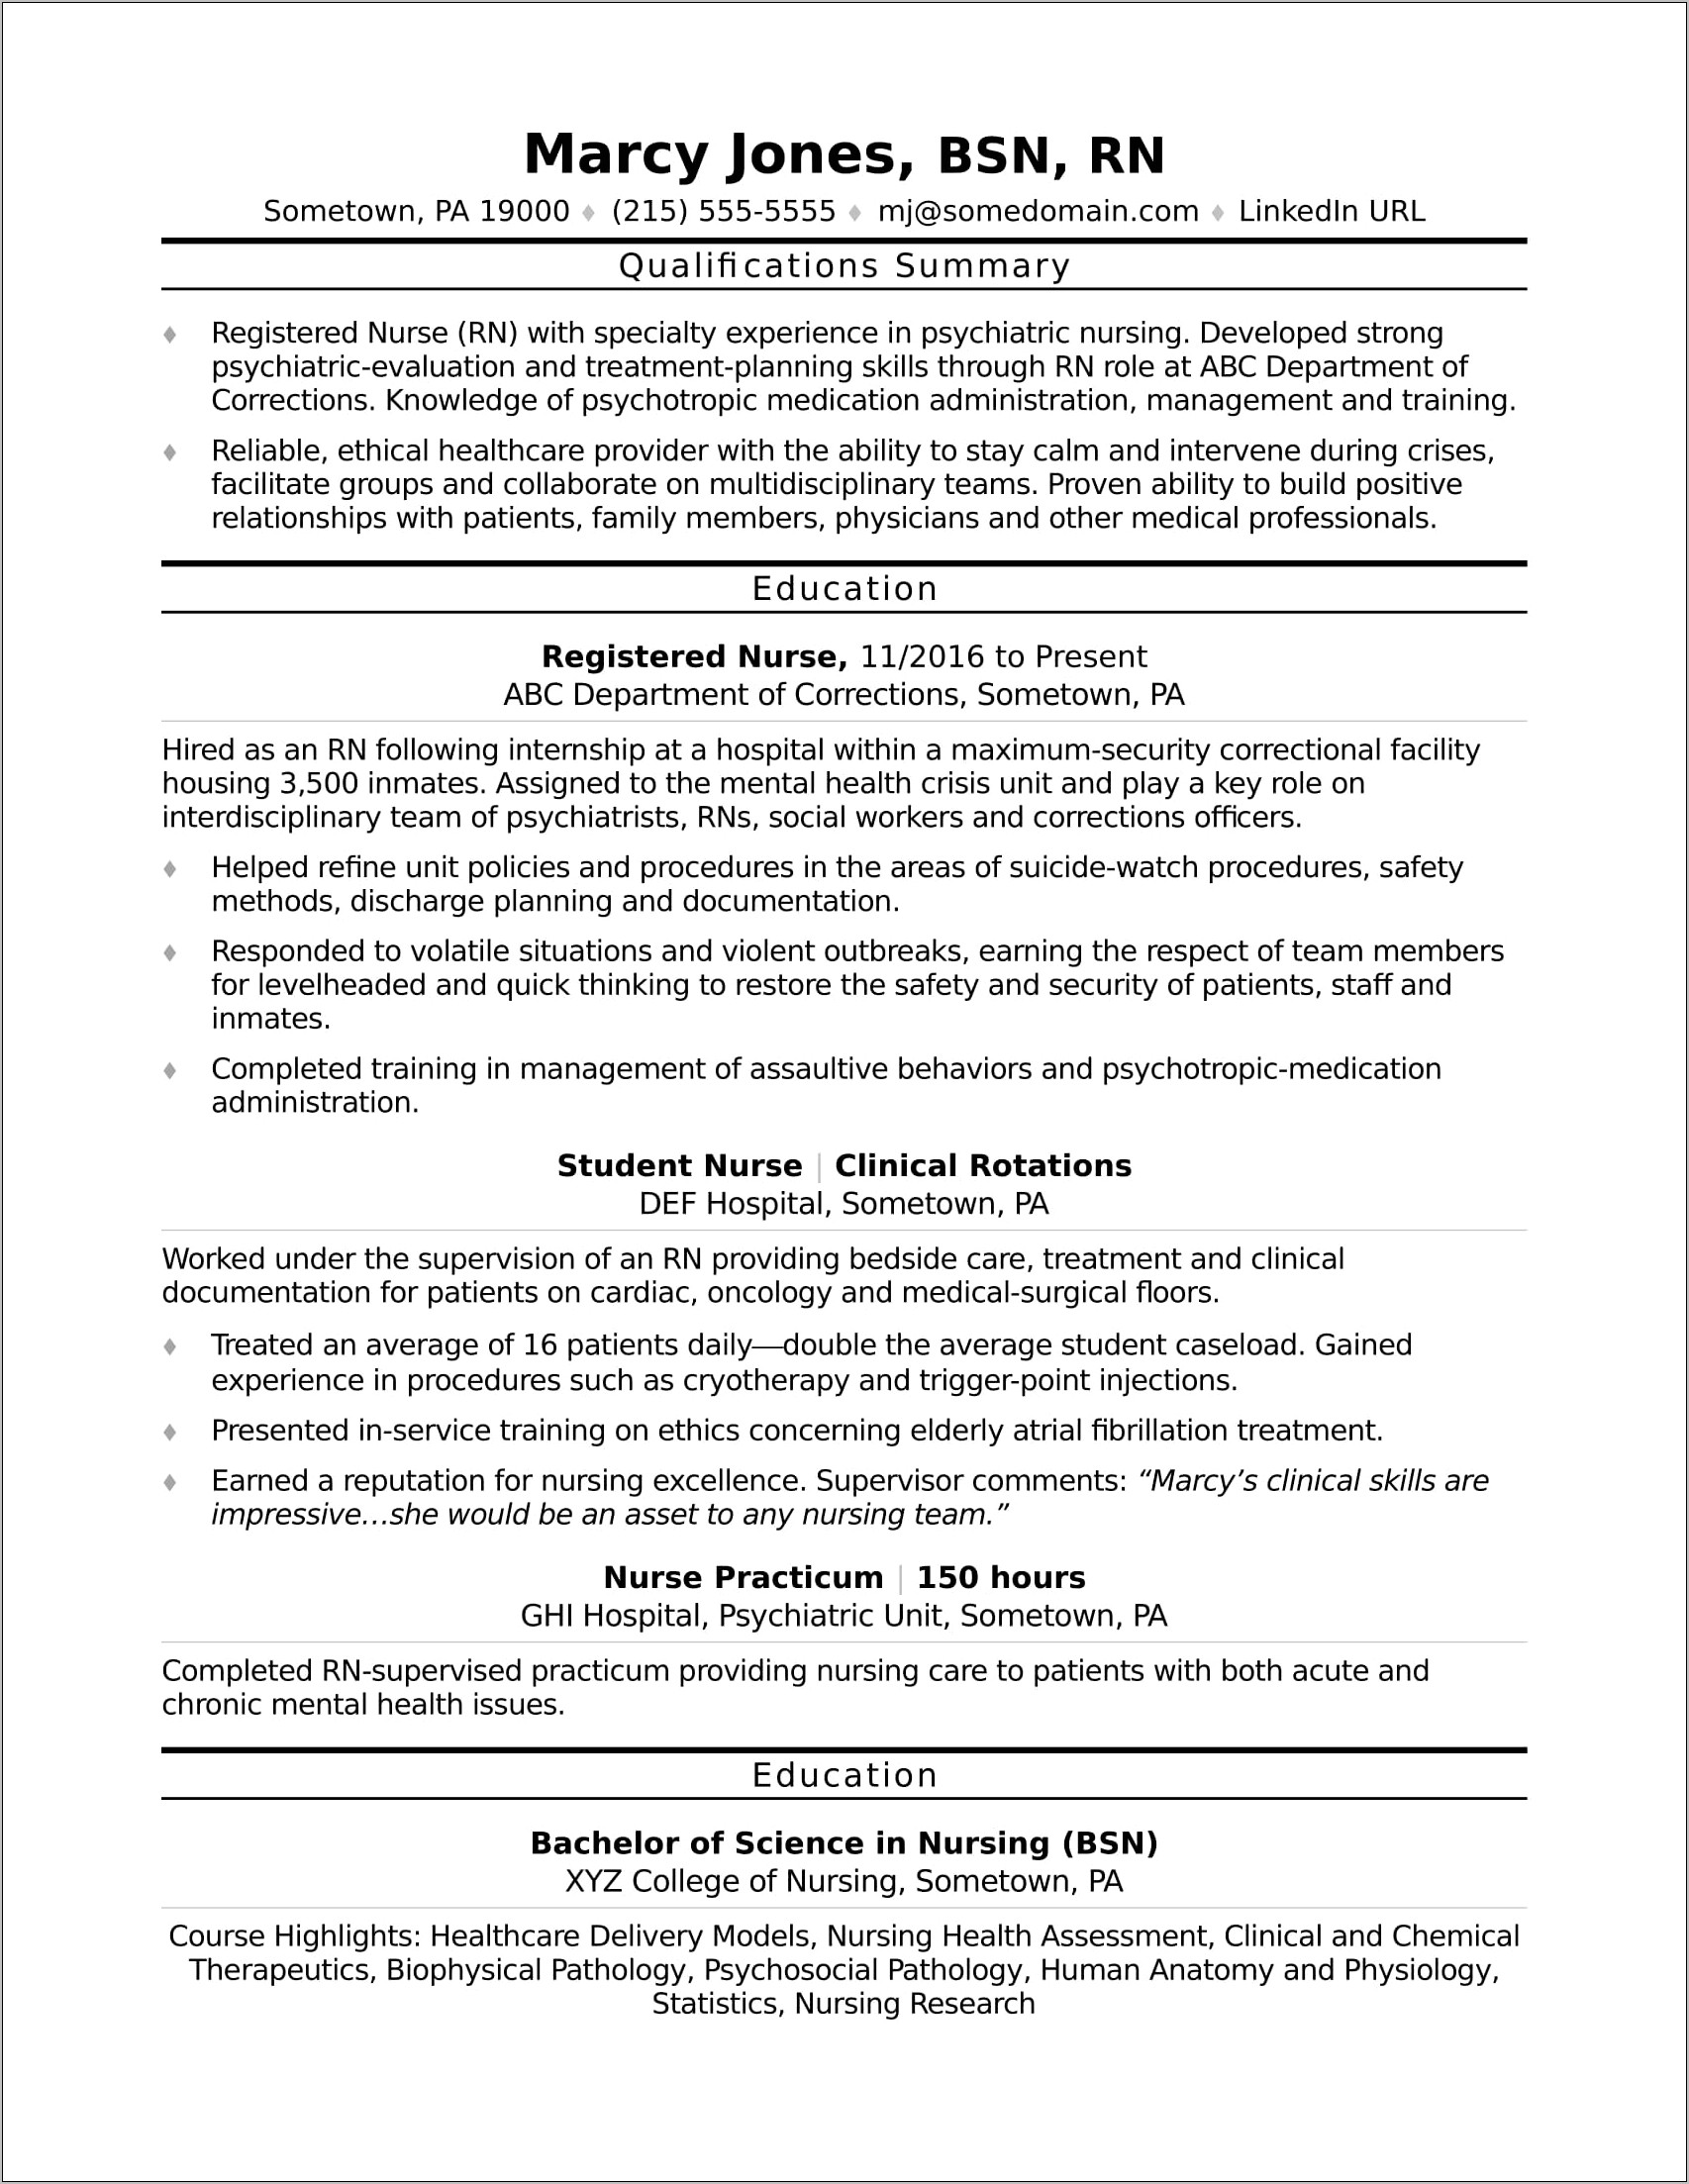 Resume Objectives For New Nursing Graduates